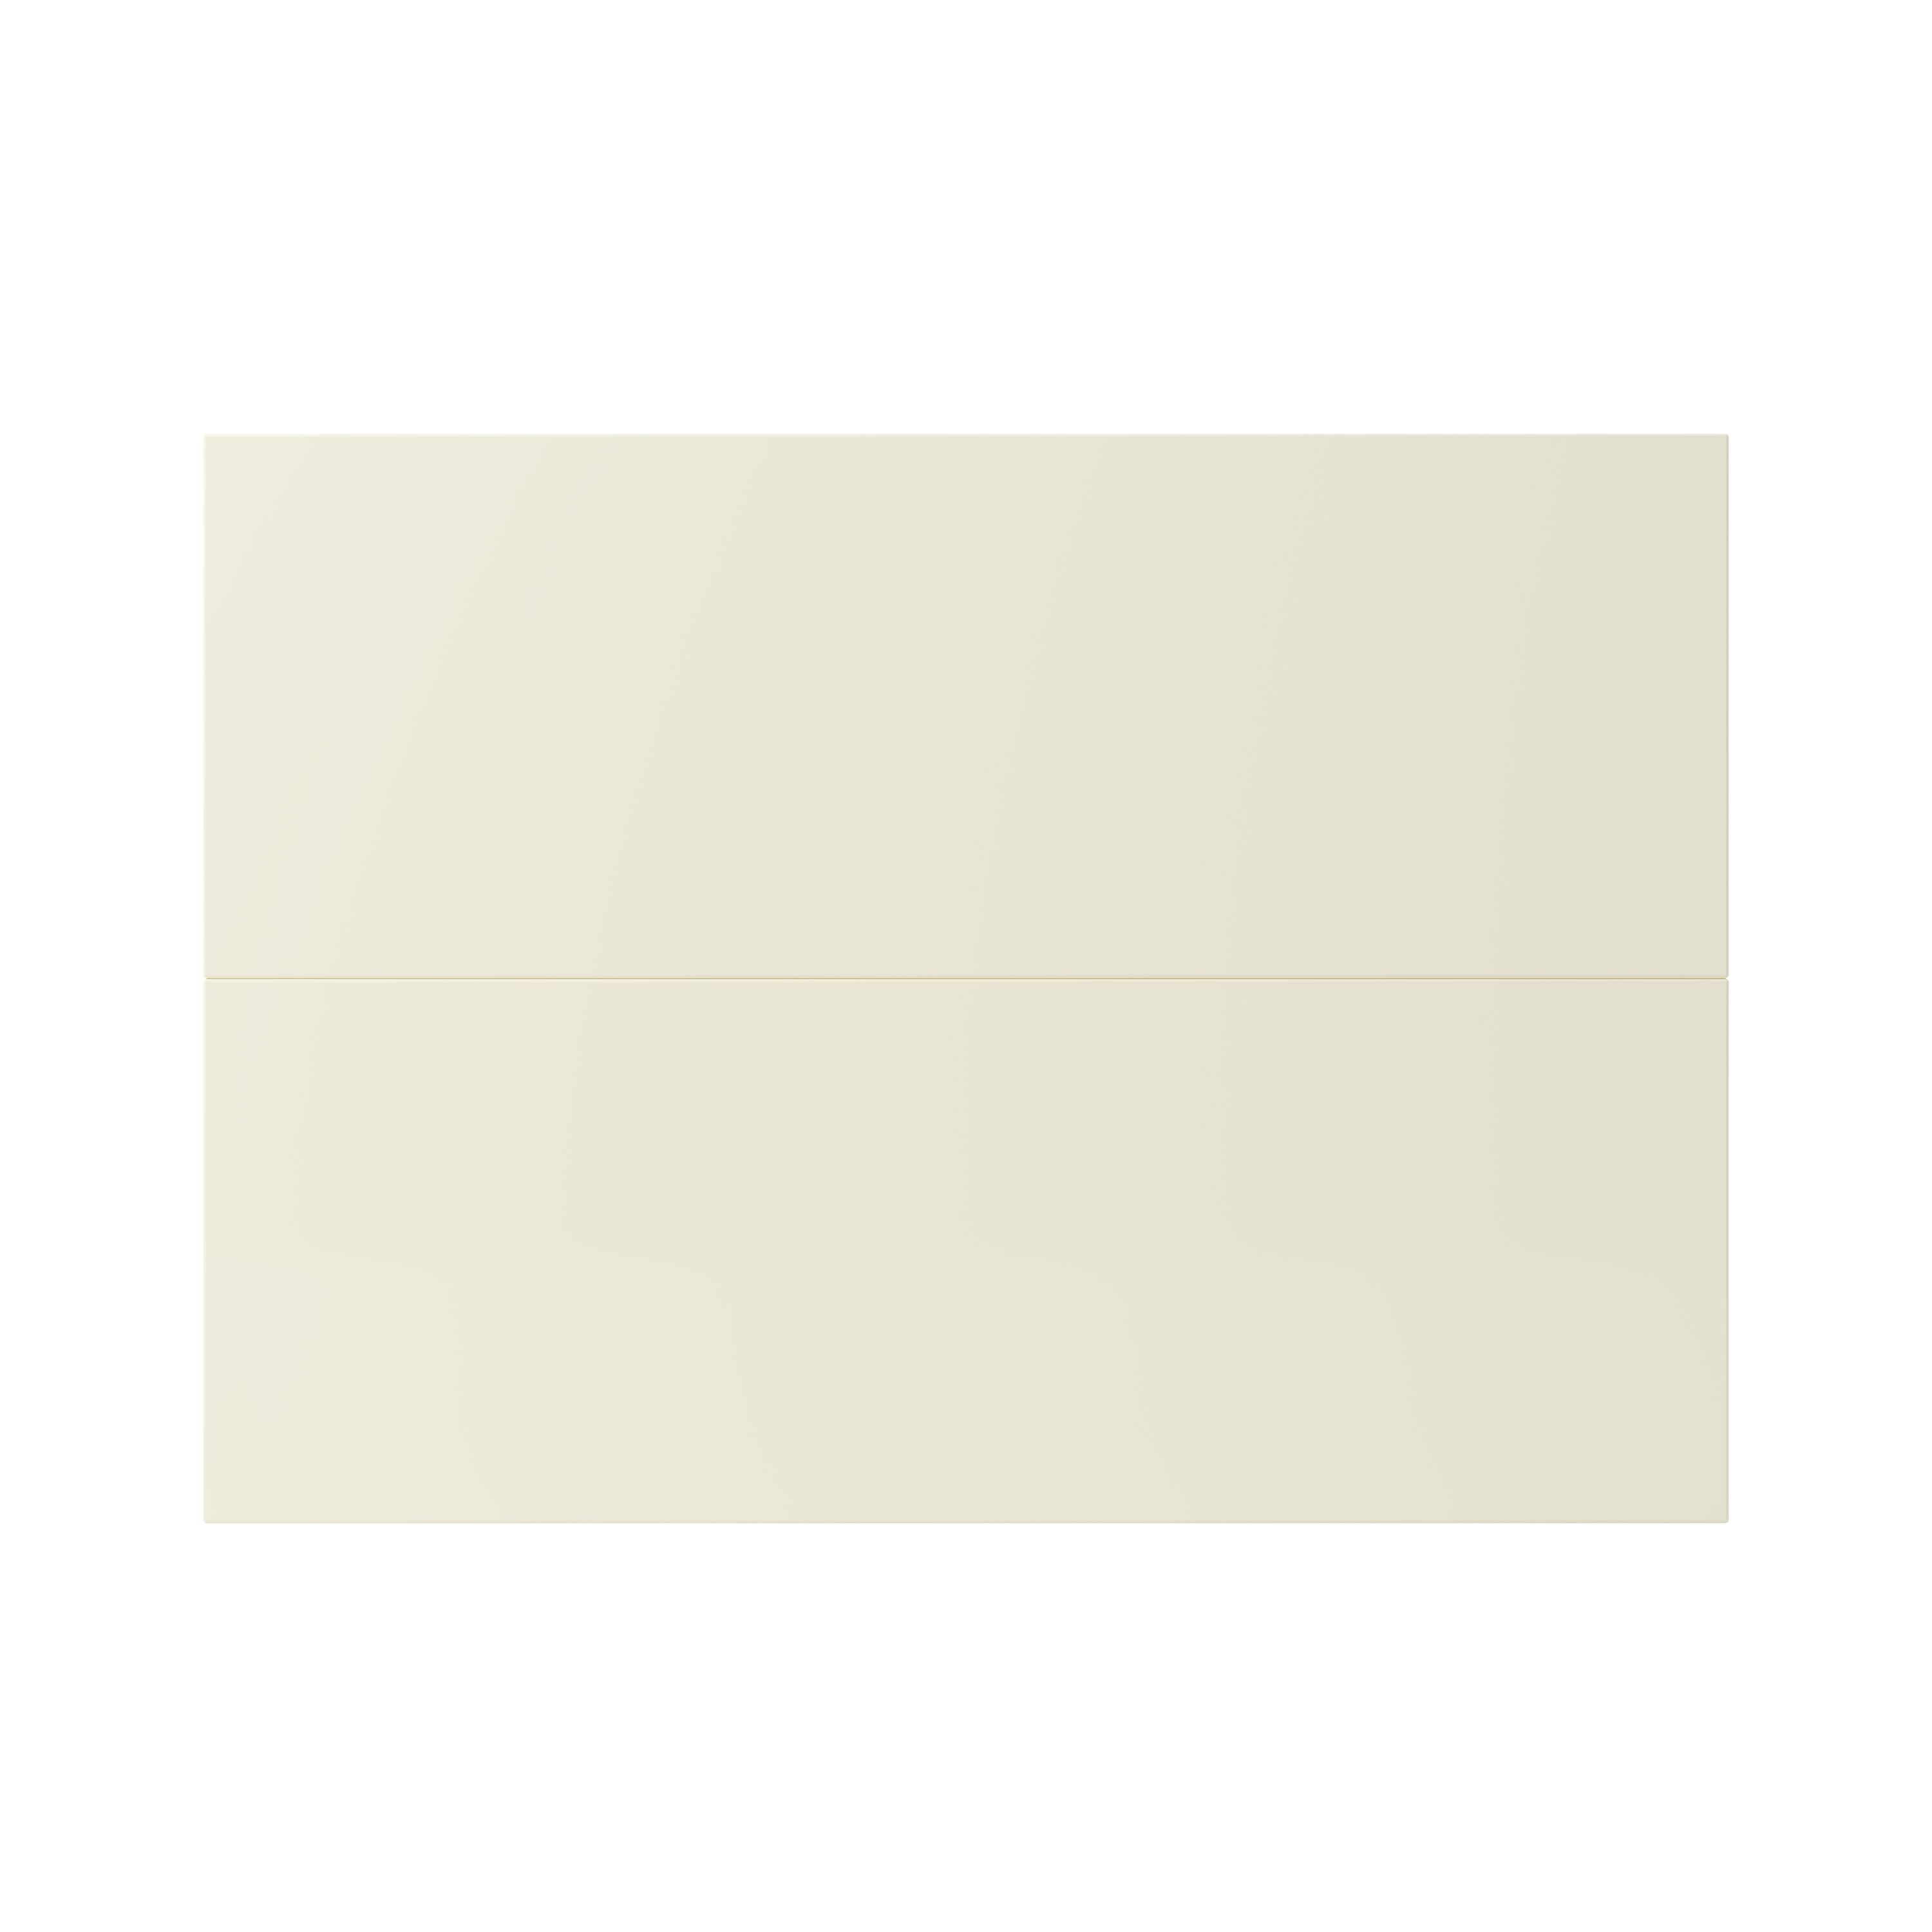 GoodHome Stevia Gloss cream slab Drawer front, bridging door & bi fold door, (W)1000mm (H)356mm (T)18mm